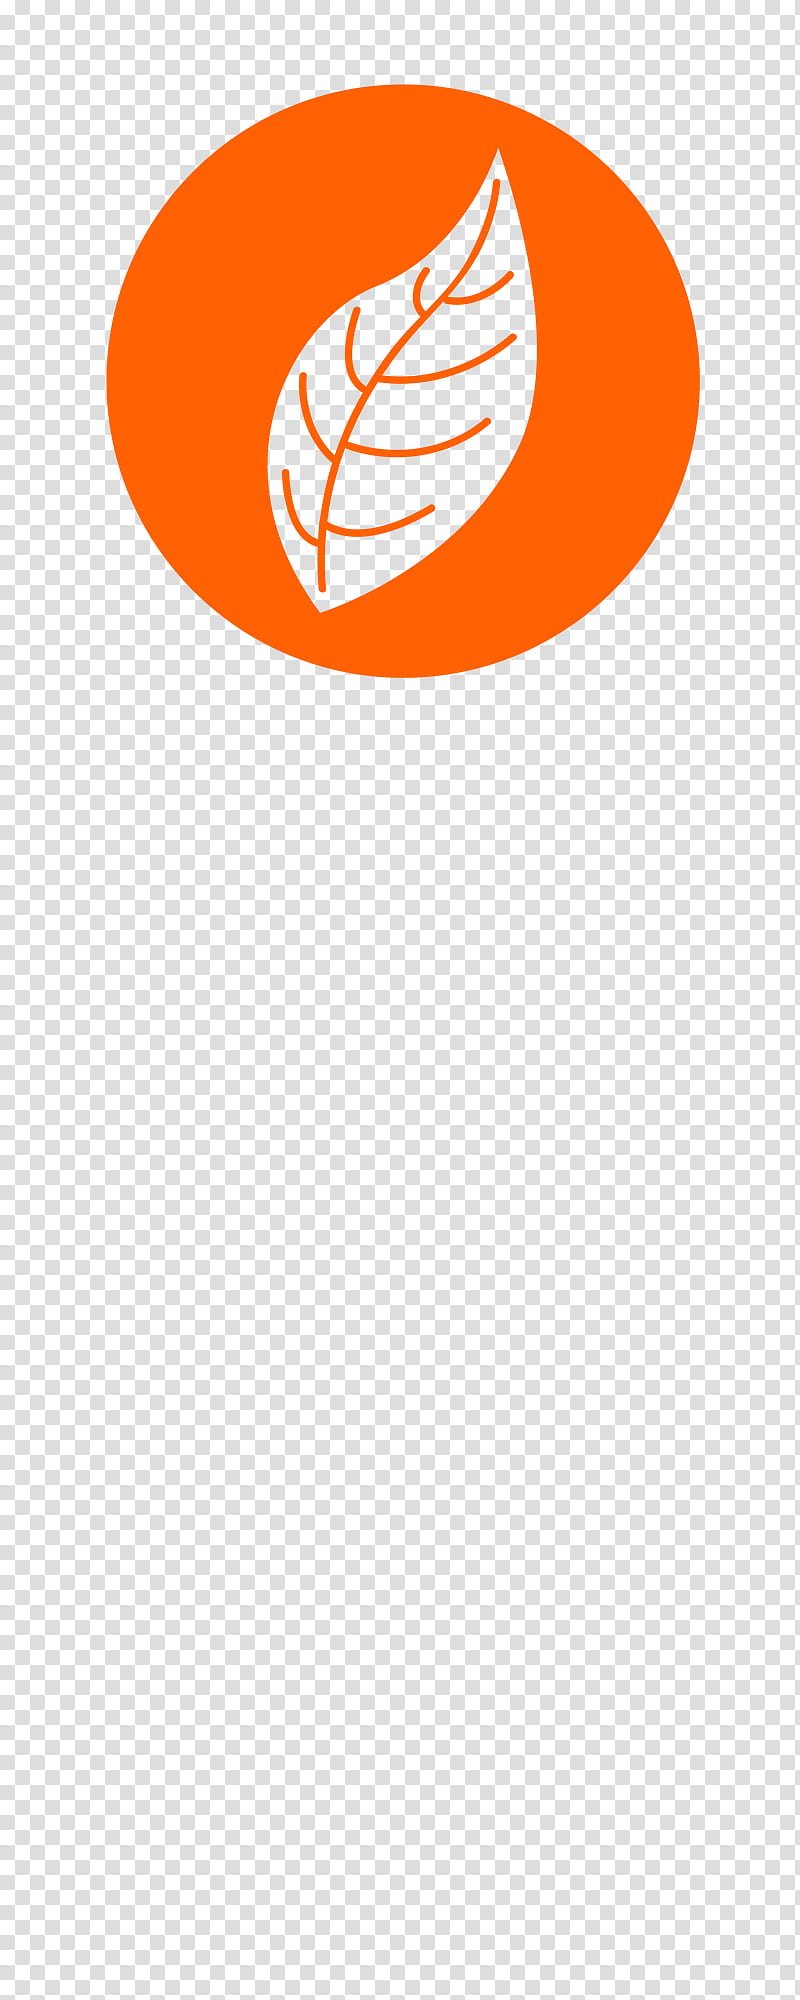 Background Effect, Logo, Adipose Tissue, Appetite, Metabolism, Yoyo Effect, Orange, Yellow transparent background PNG clipart